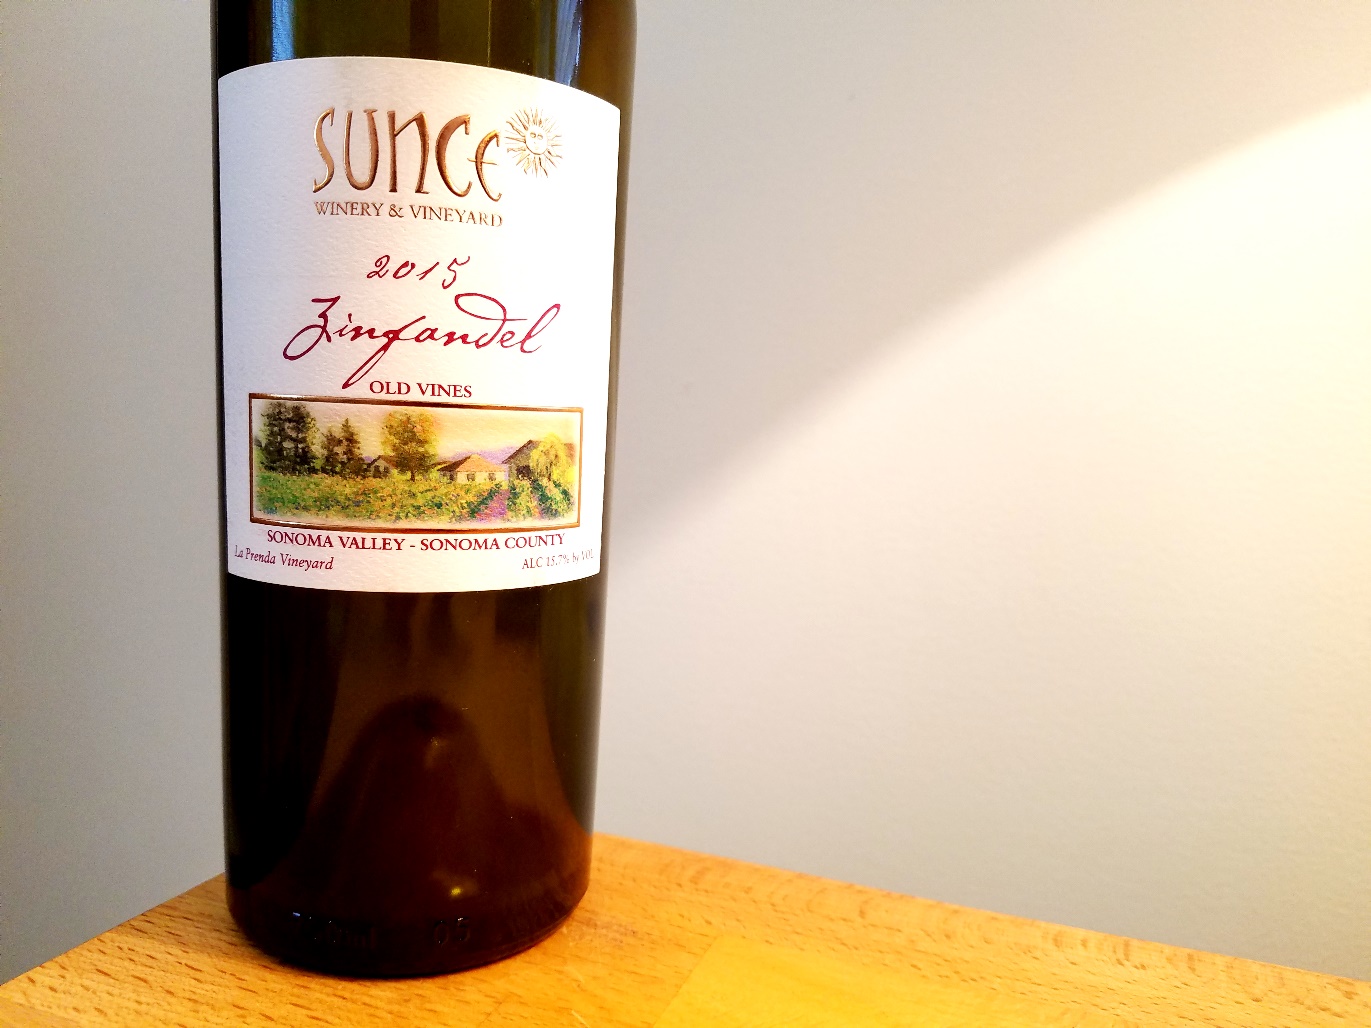 Sunce Winery & Vineyard, Old Vines Zinfandel 2015, La Prenda Vineyard, Sonoma Valley, Sonoma County, California, Wine Casual